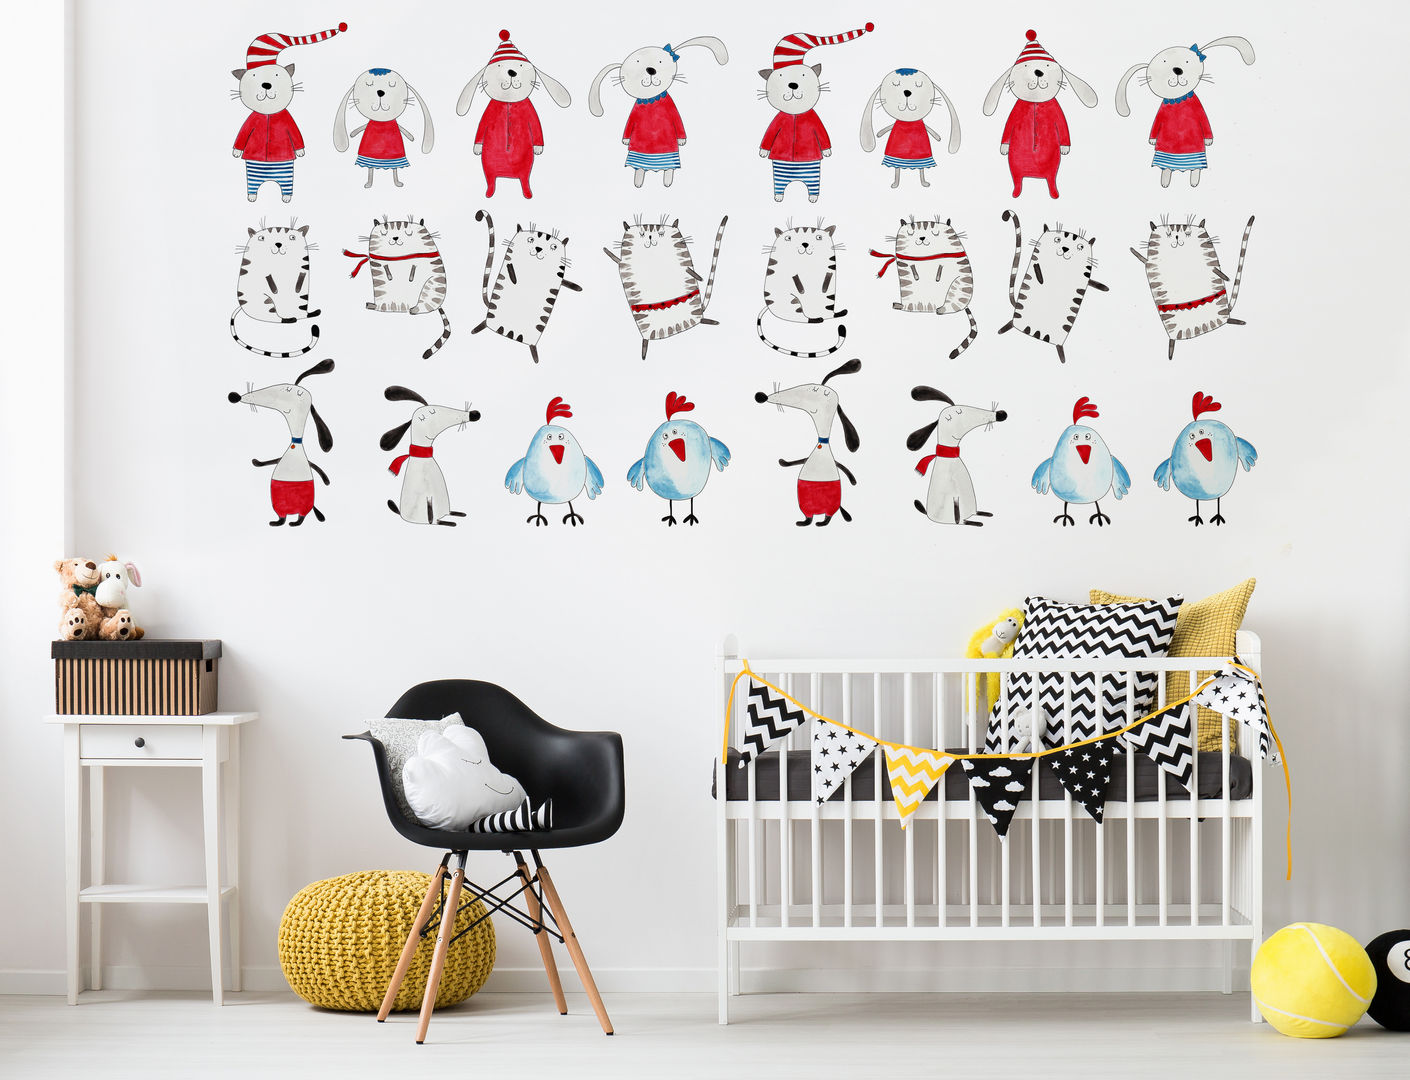 Little Friends Pixers Habitaciones para niños de estilo minimalista wall mural,wallpaper,kid,child,animals,drawing